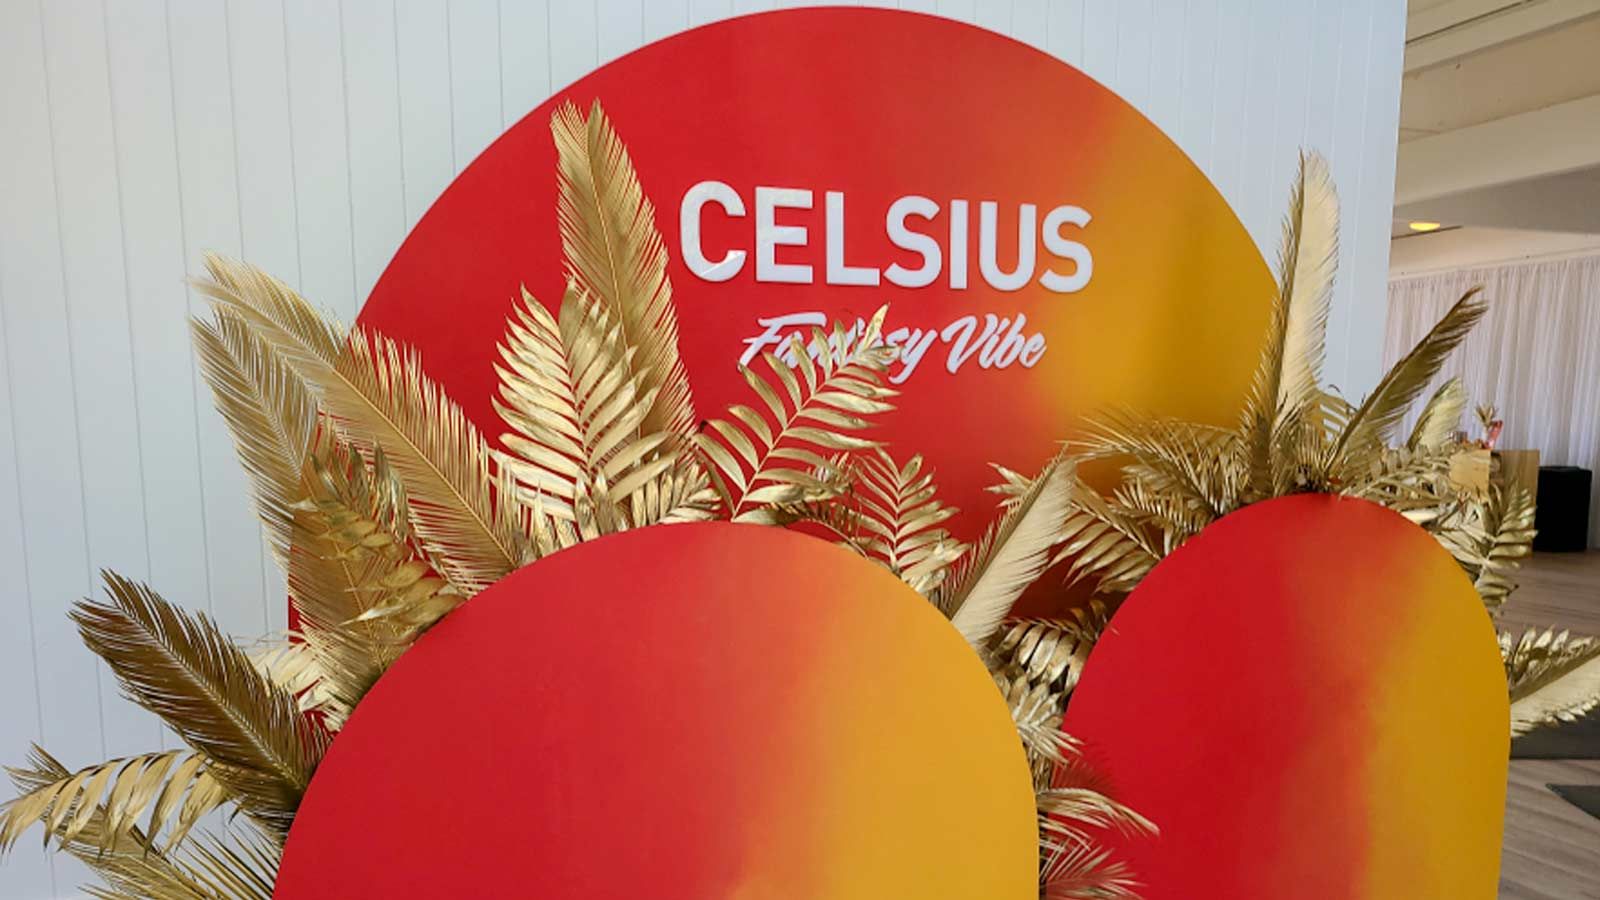 CELSIUS event signage installed indoors